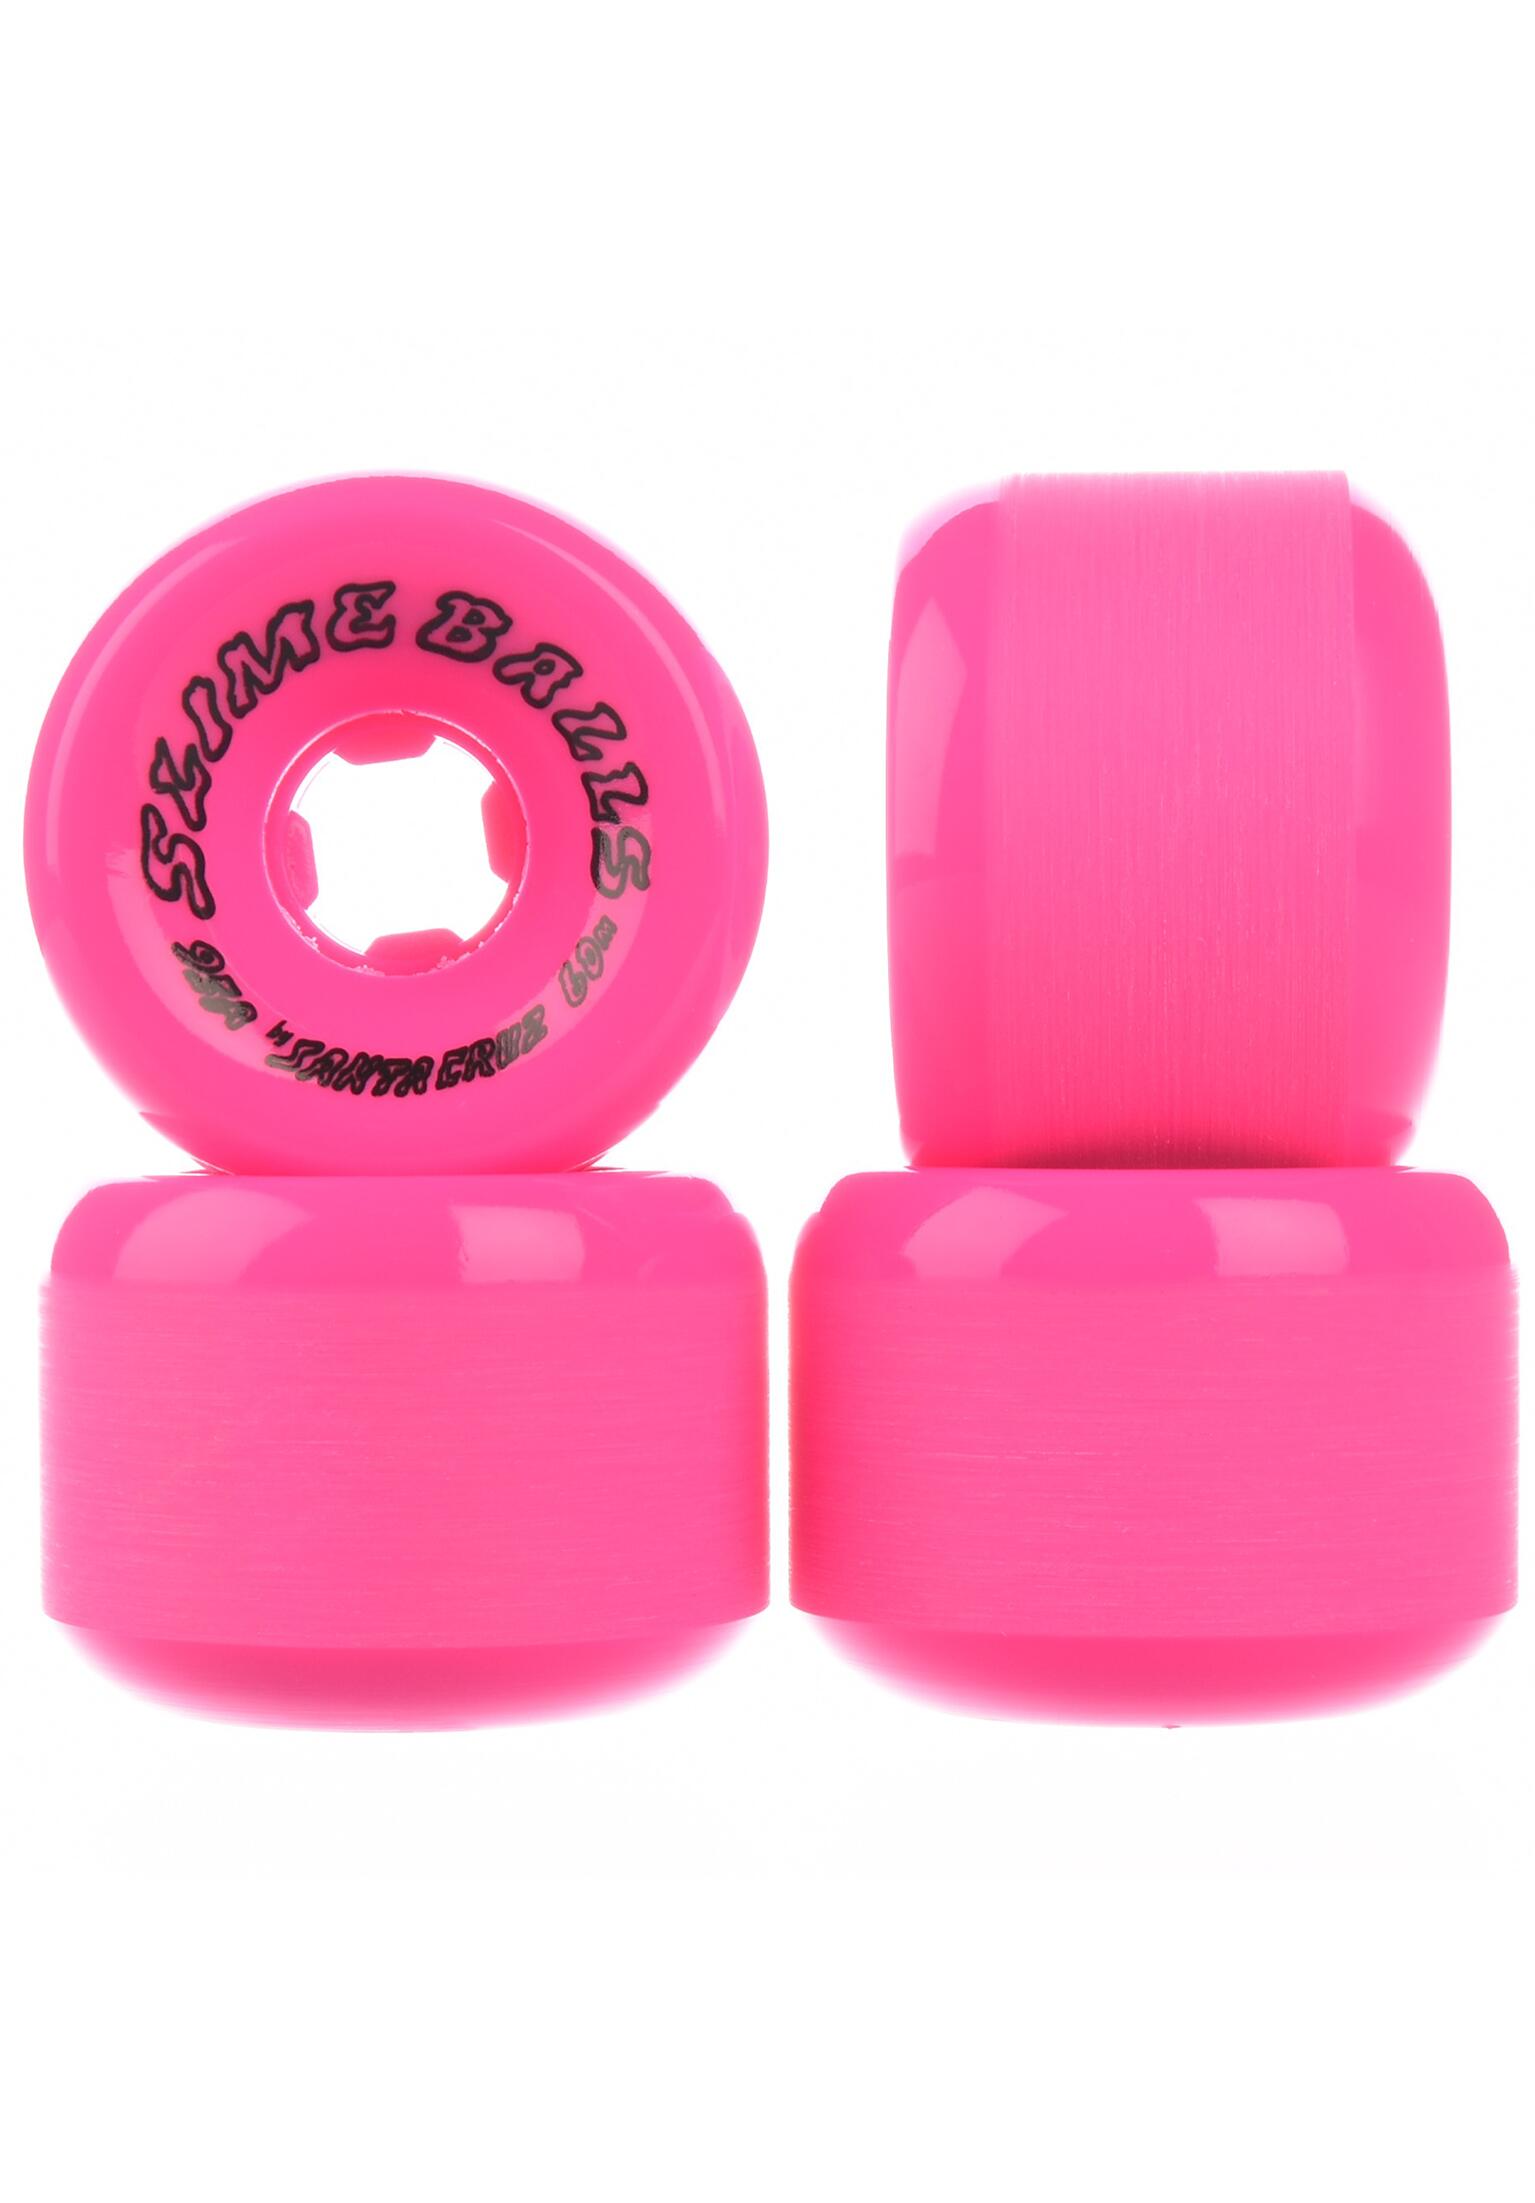 Slime Balls Scudwads Vomits Neon Pink 95a 60mm Skateboard Wheels